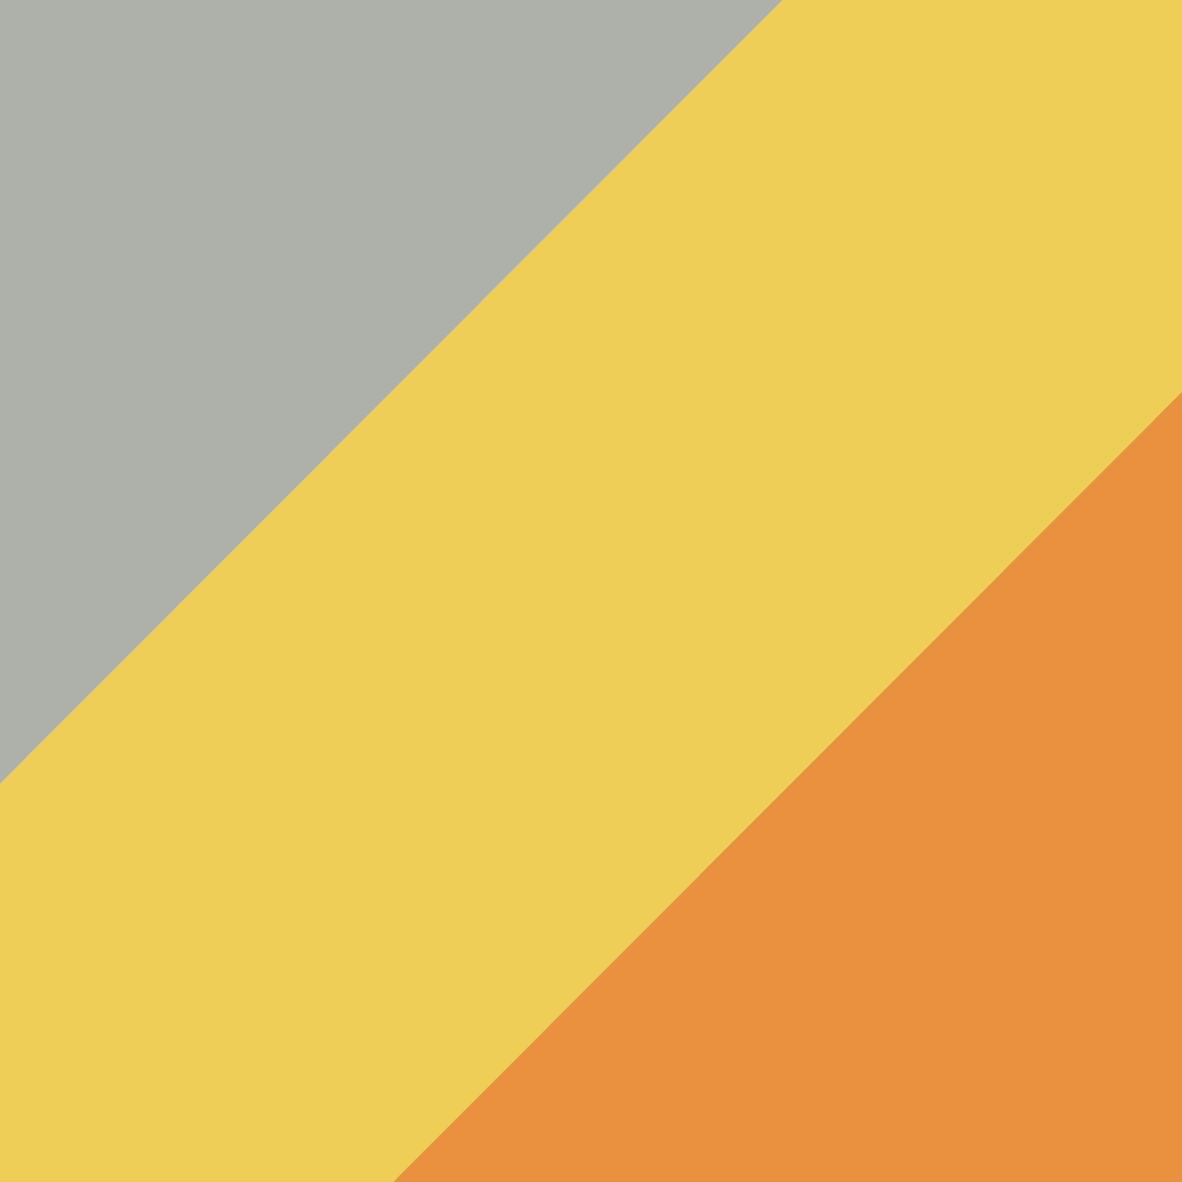 5030 grau orange gelb